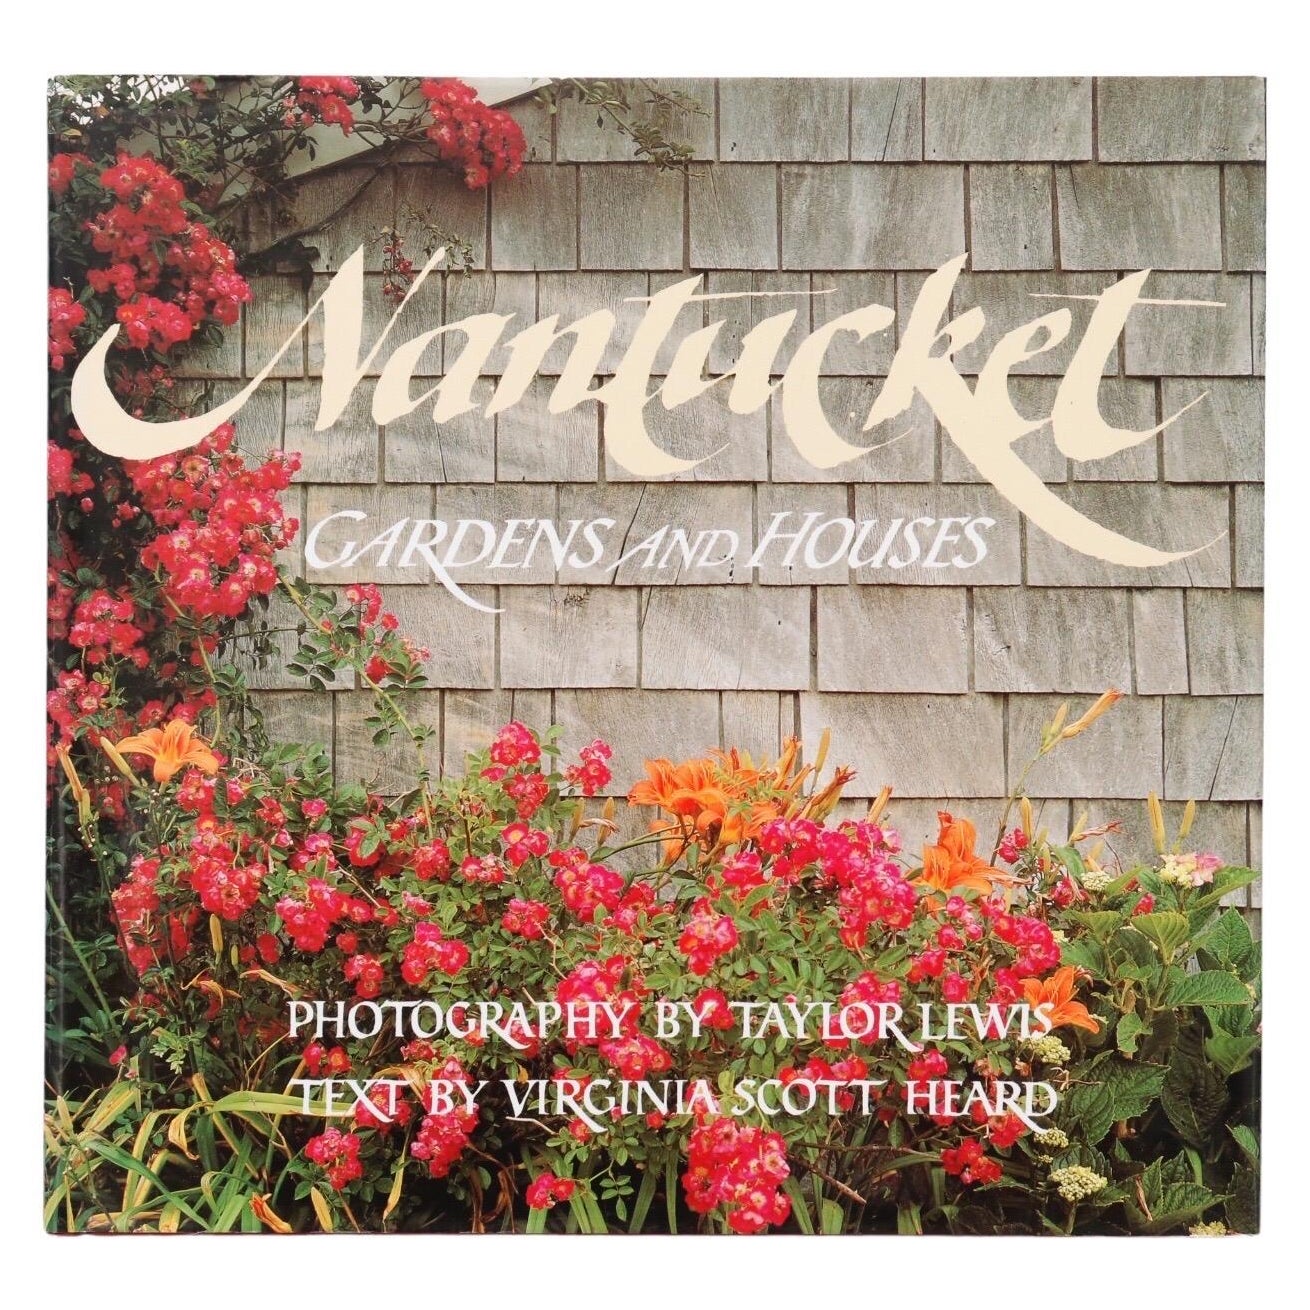 Nantucket Gardens and Houses